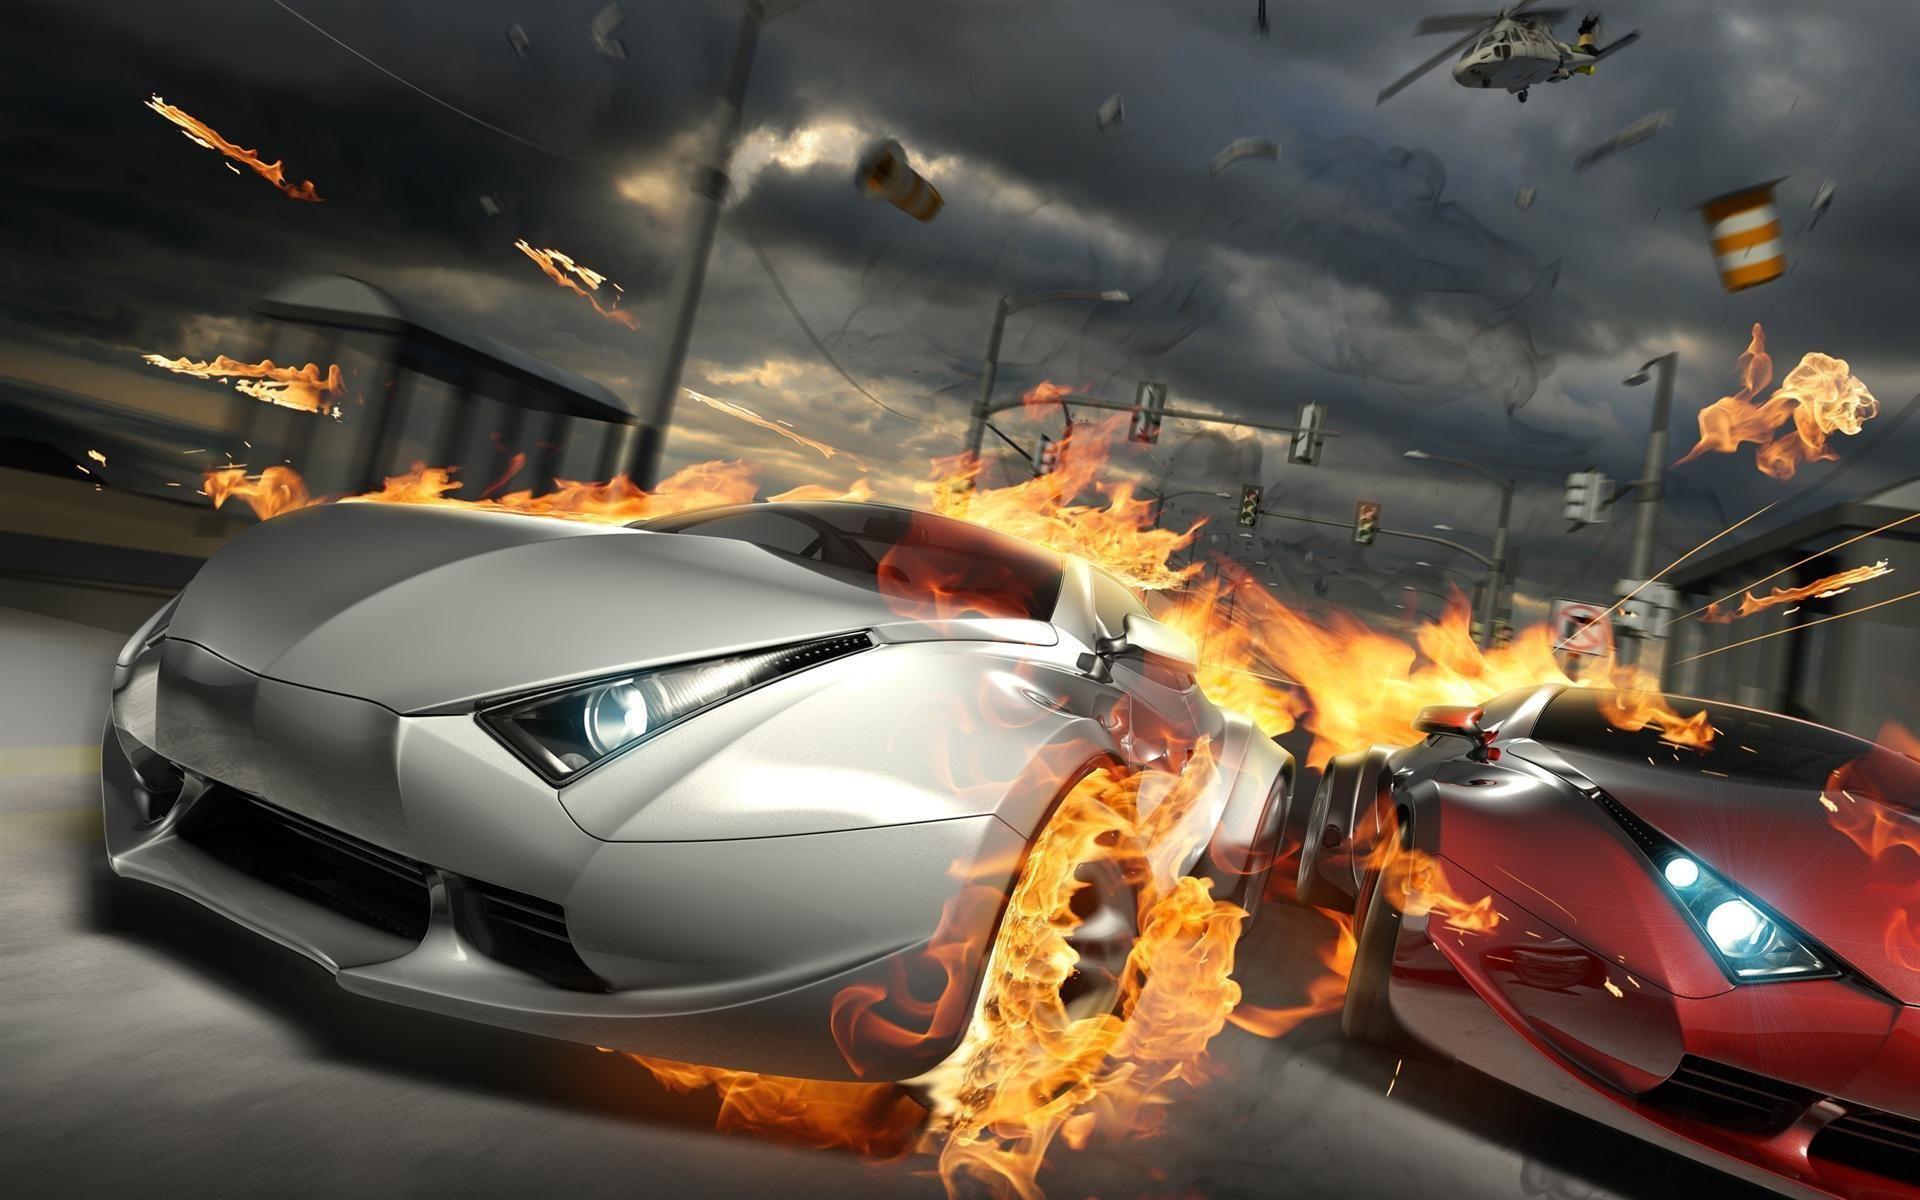 Best 3D Cars HD Free desktop Wallpaper. Car background